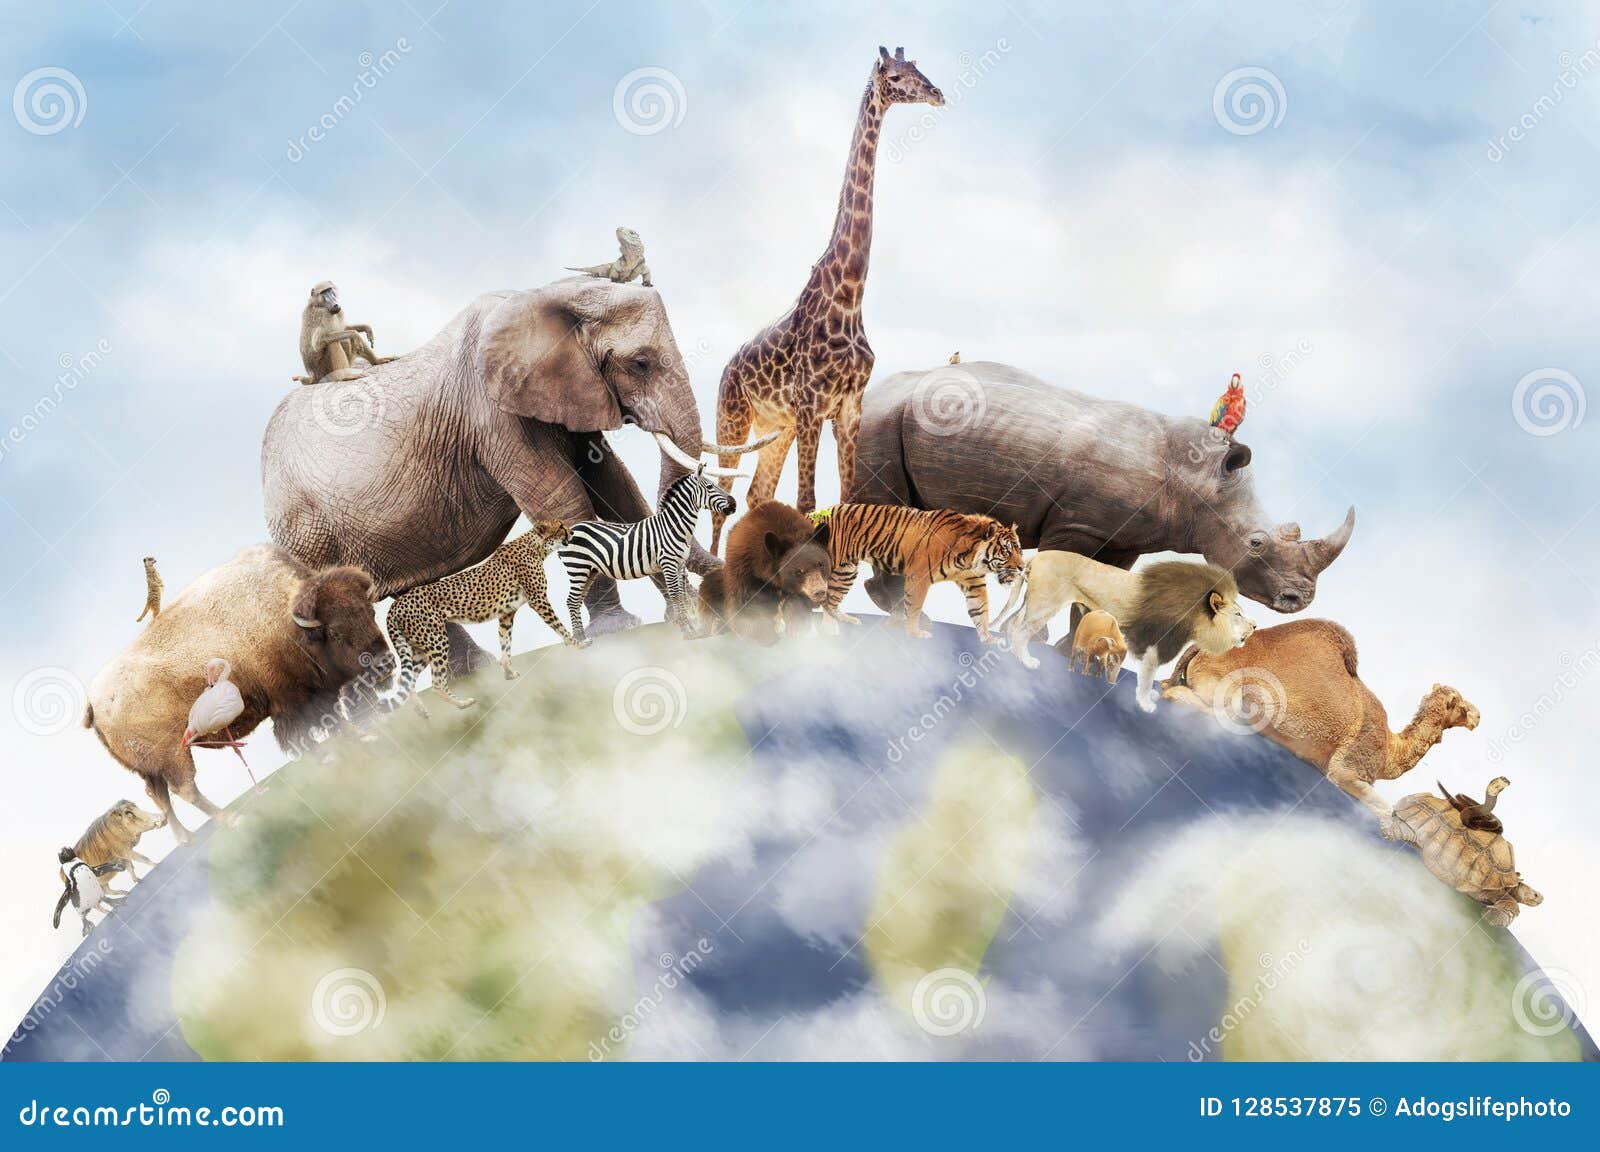 World of Wild Animals stock illustration. Illustration of rhino - 128537875